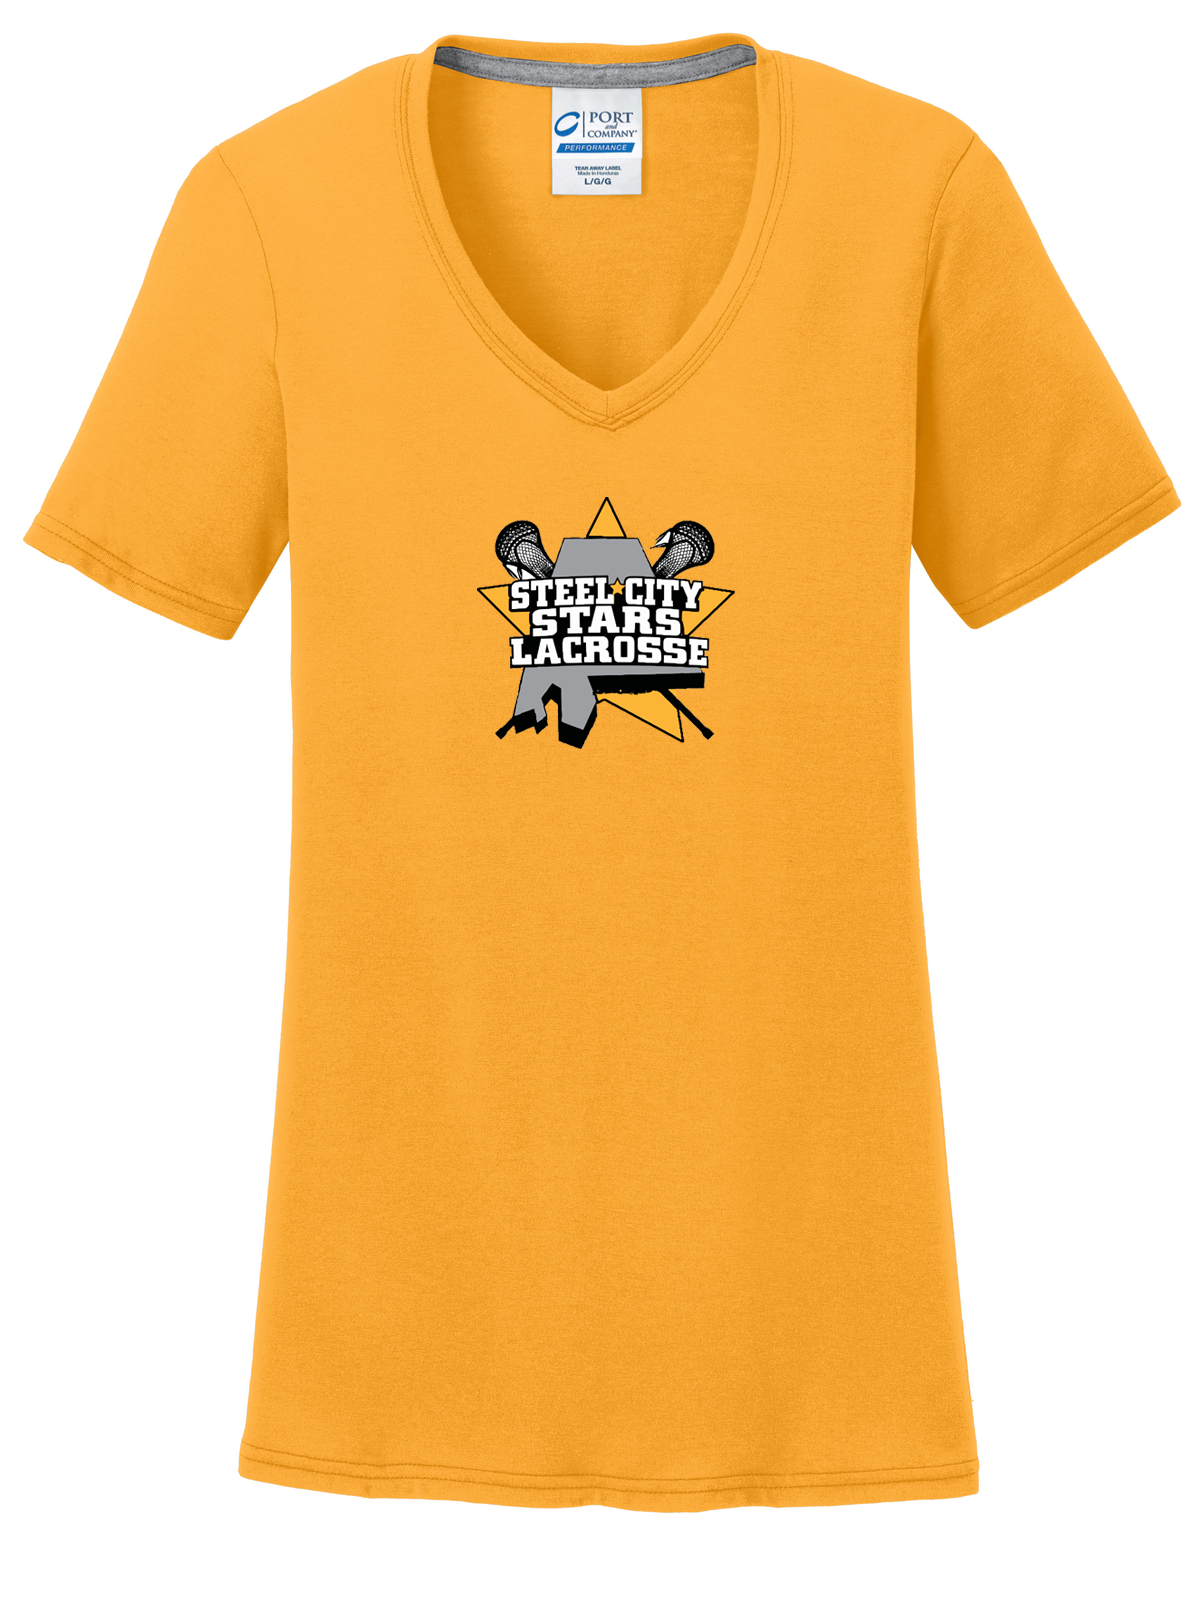 Stars Lacrosse Women's T-Shirt